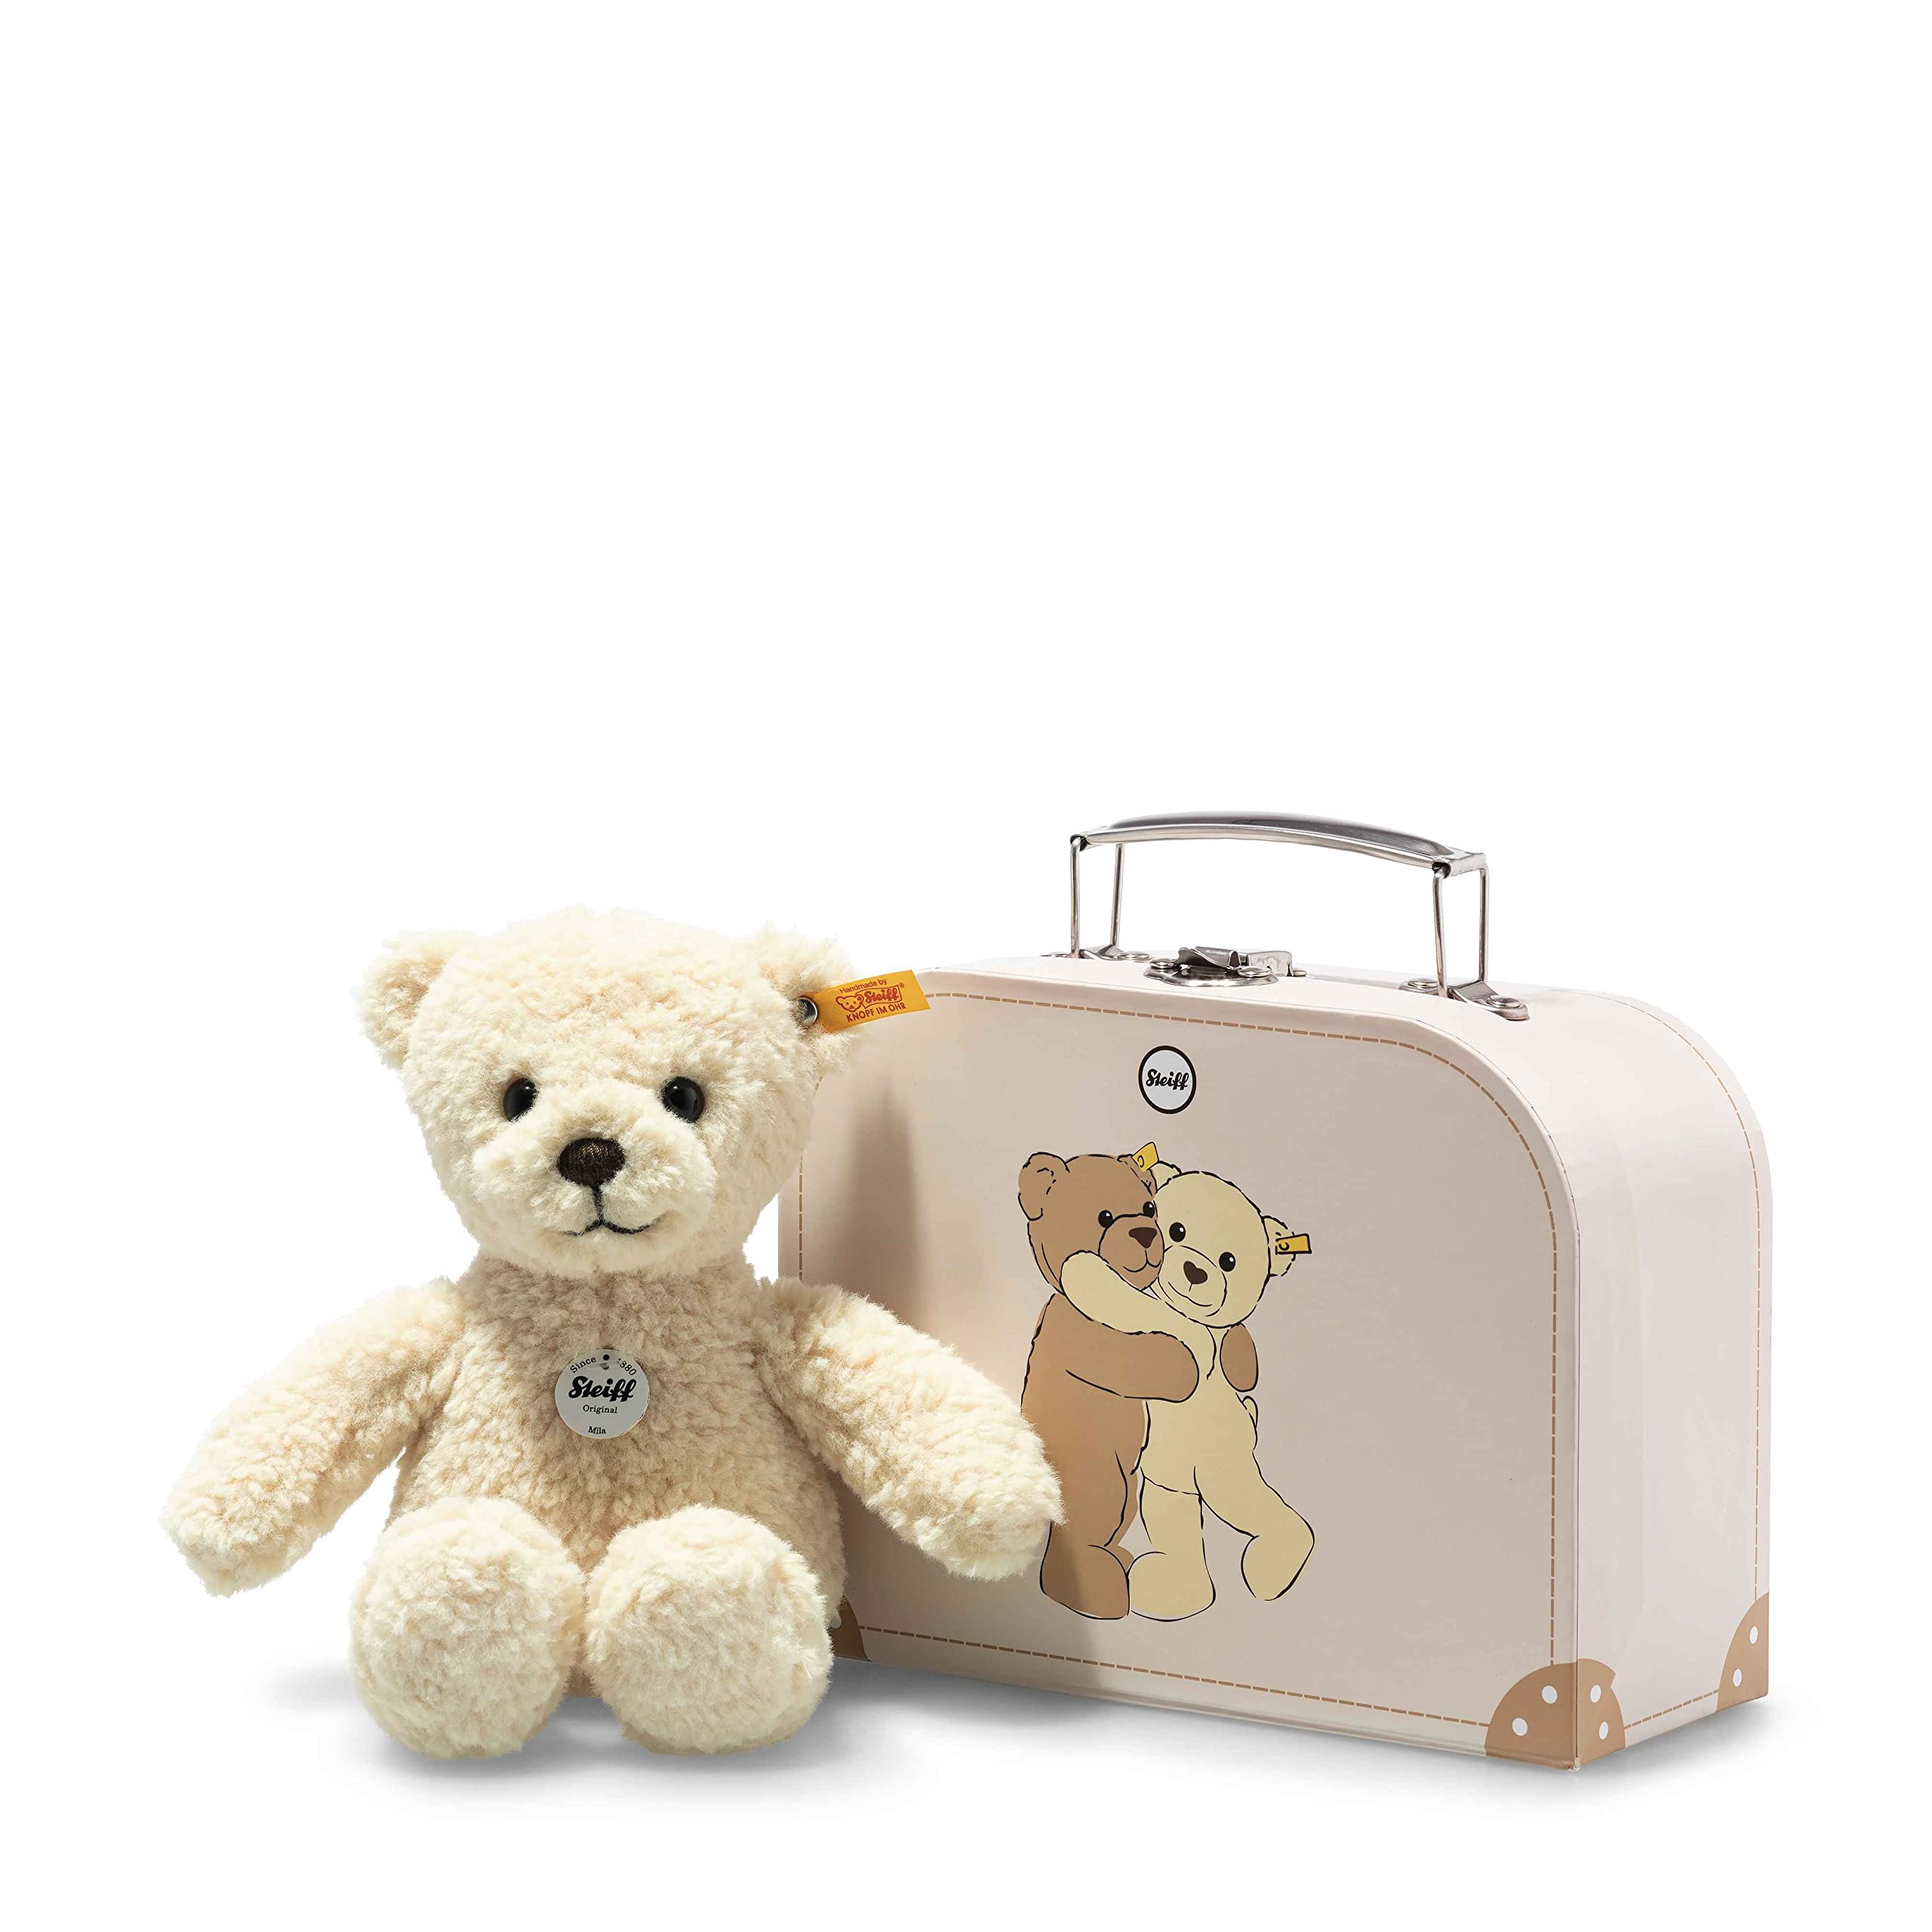 Steiff 114038 Teddybär Mila - 21 cm - Kuscheltier - vanille im Koffer